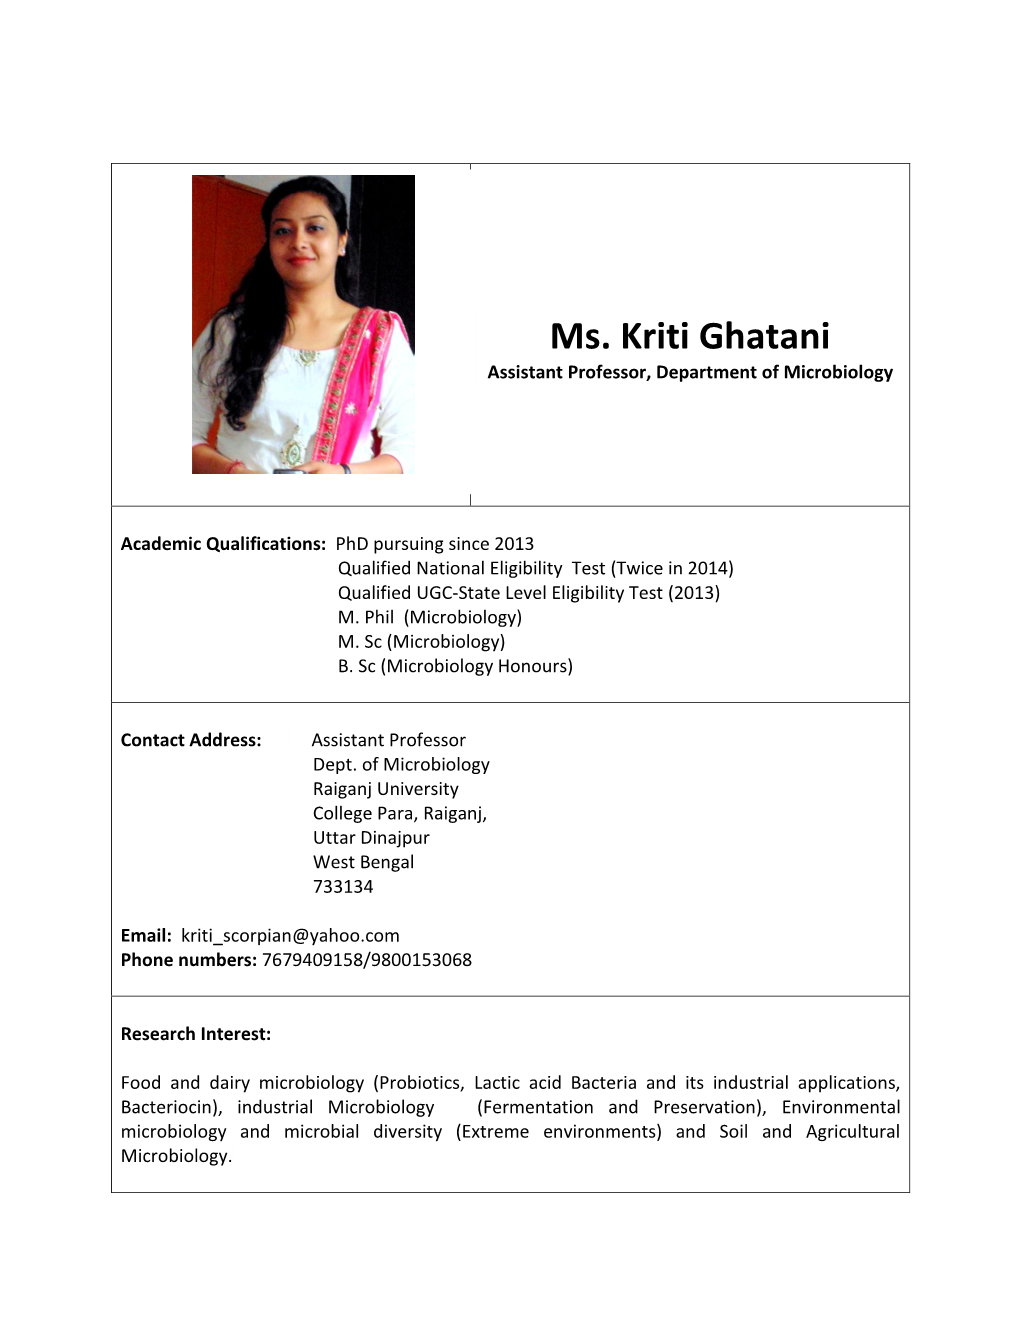 Ms. Kriti Ghatani Assistant Professor, Department of Microbiology